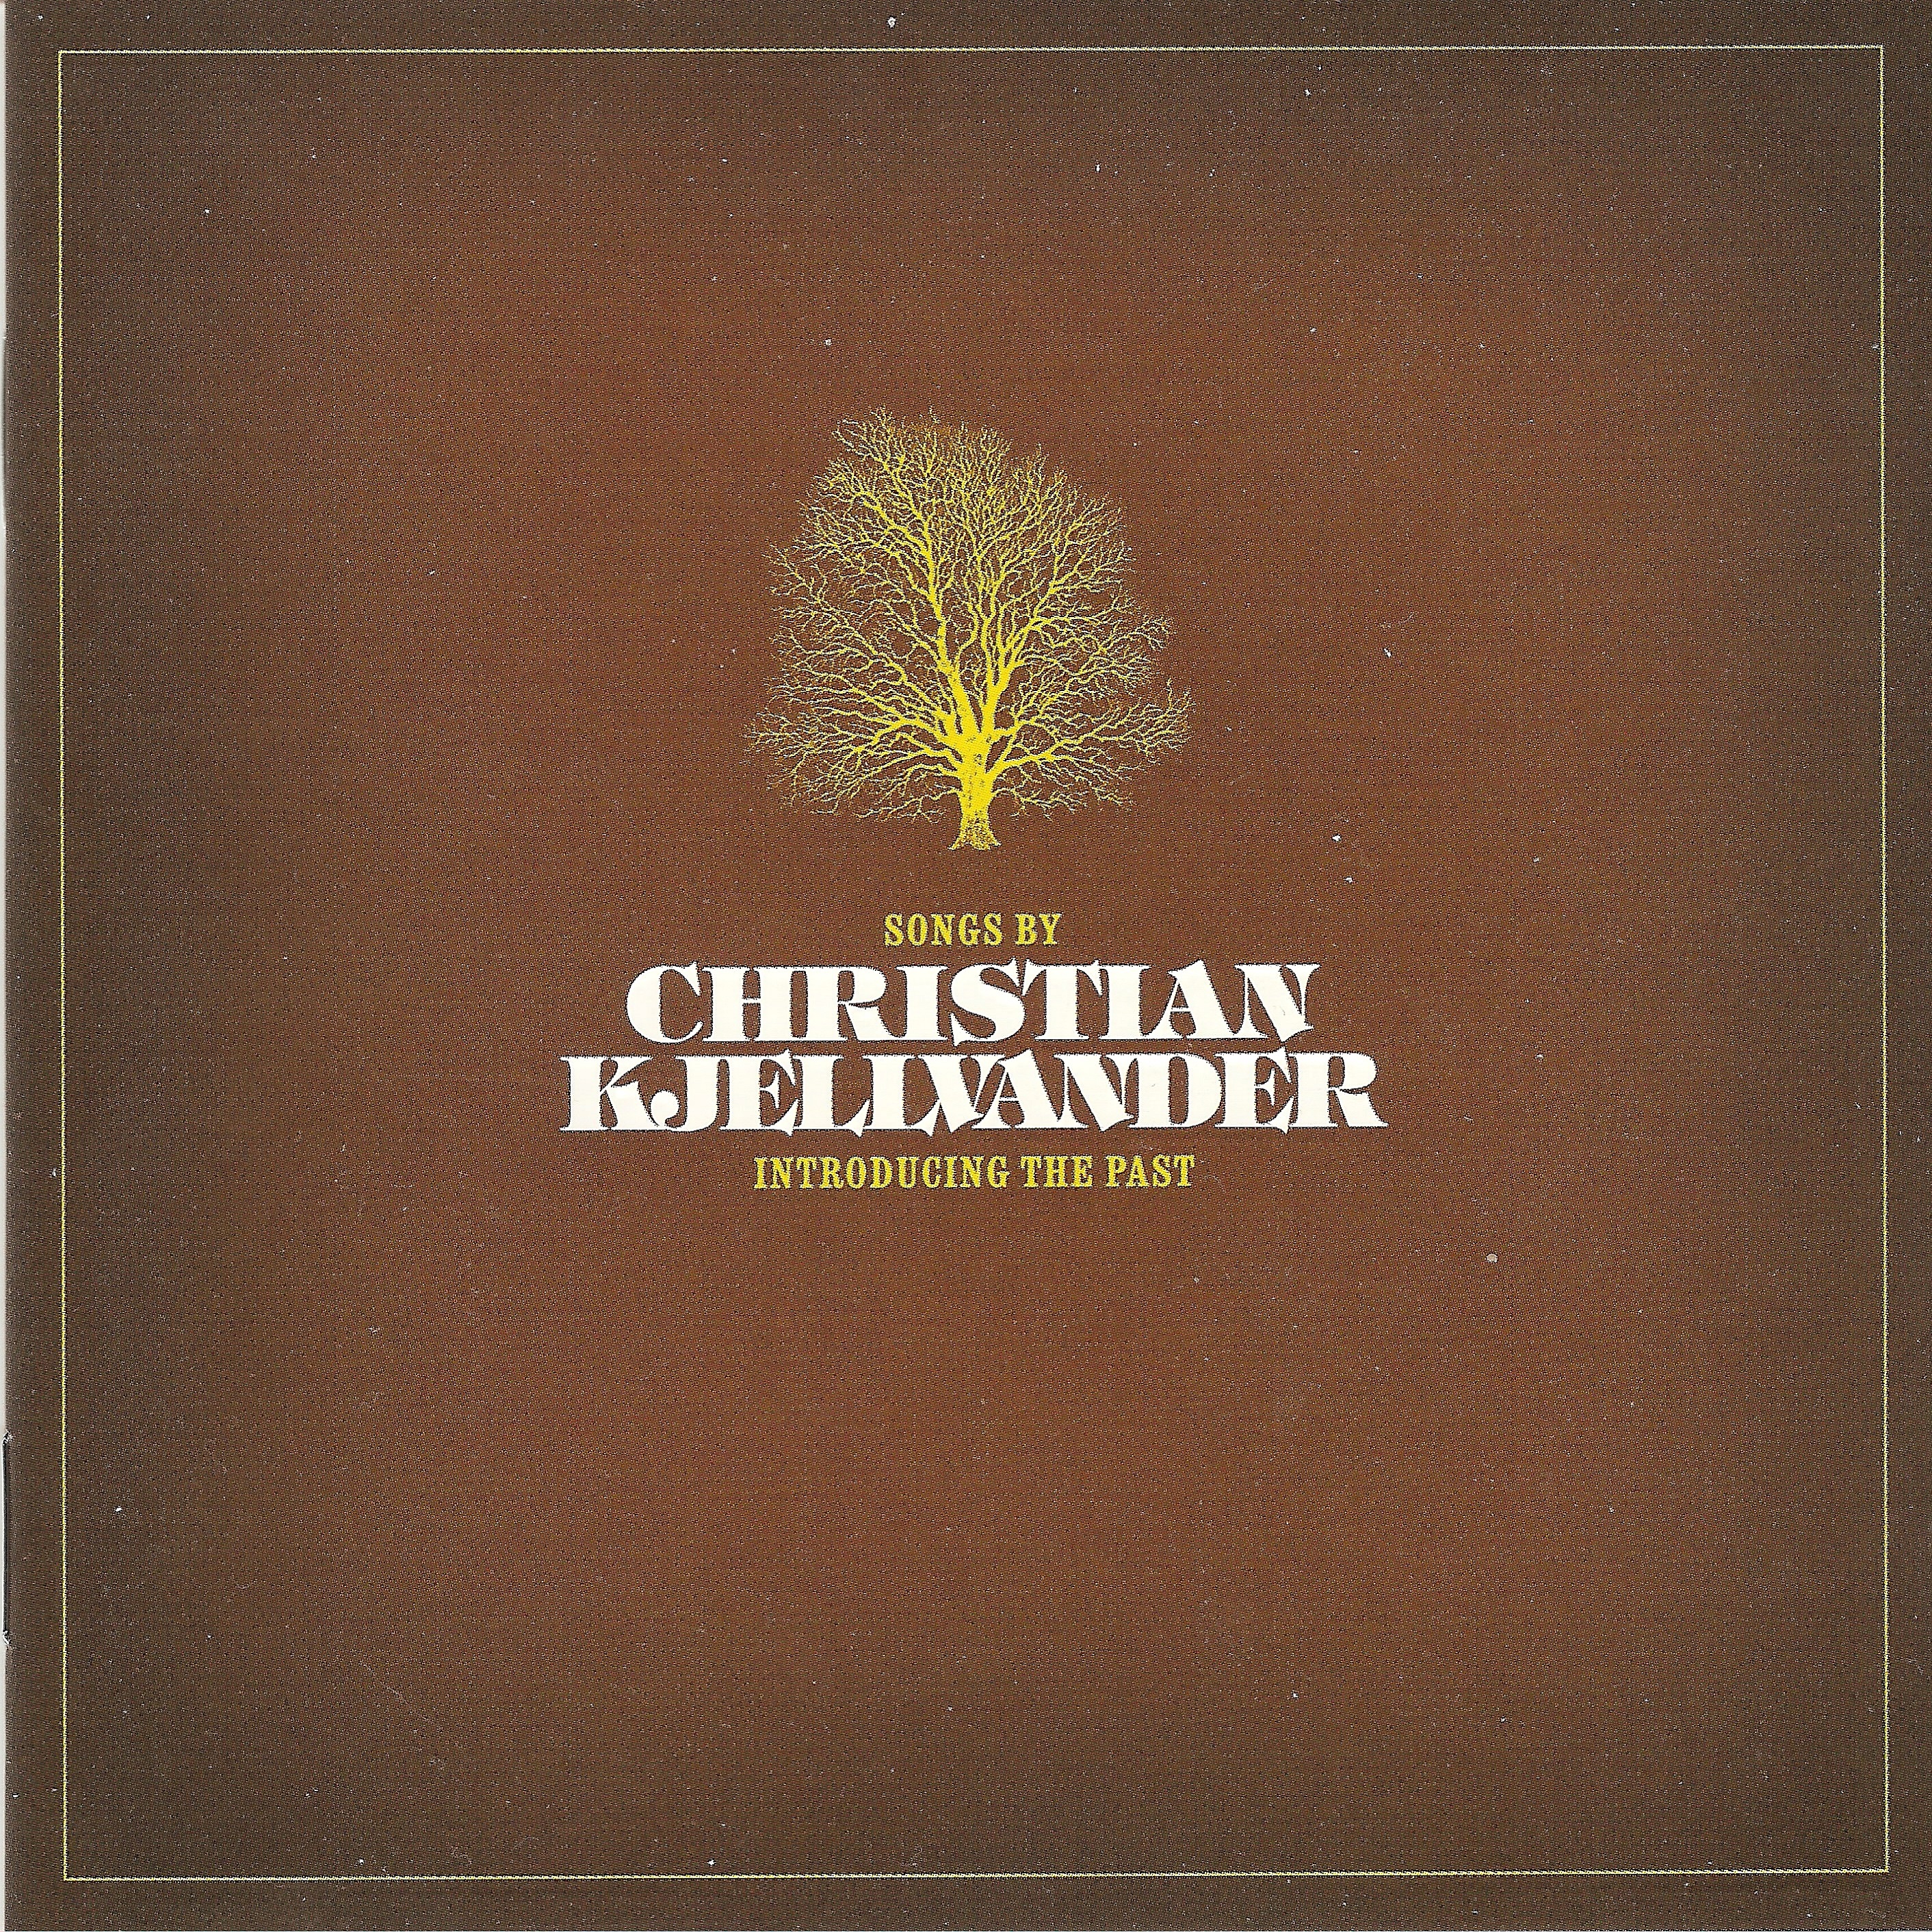 Christian Kjellvander - Introducing The Past - 2xCD